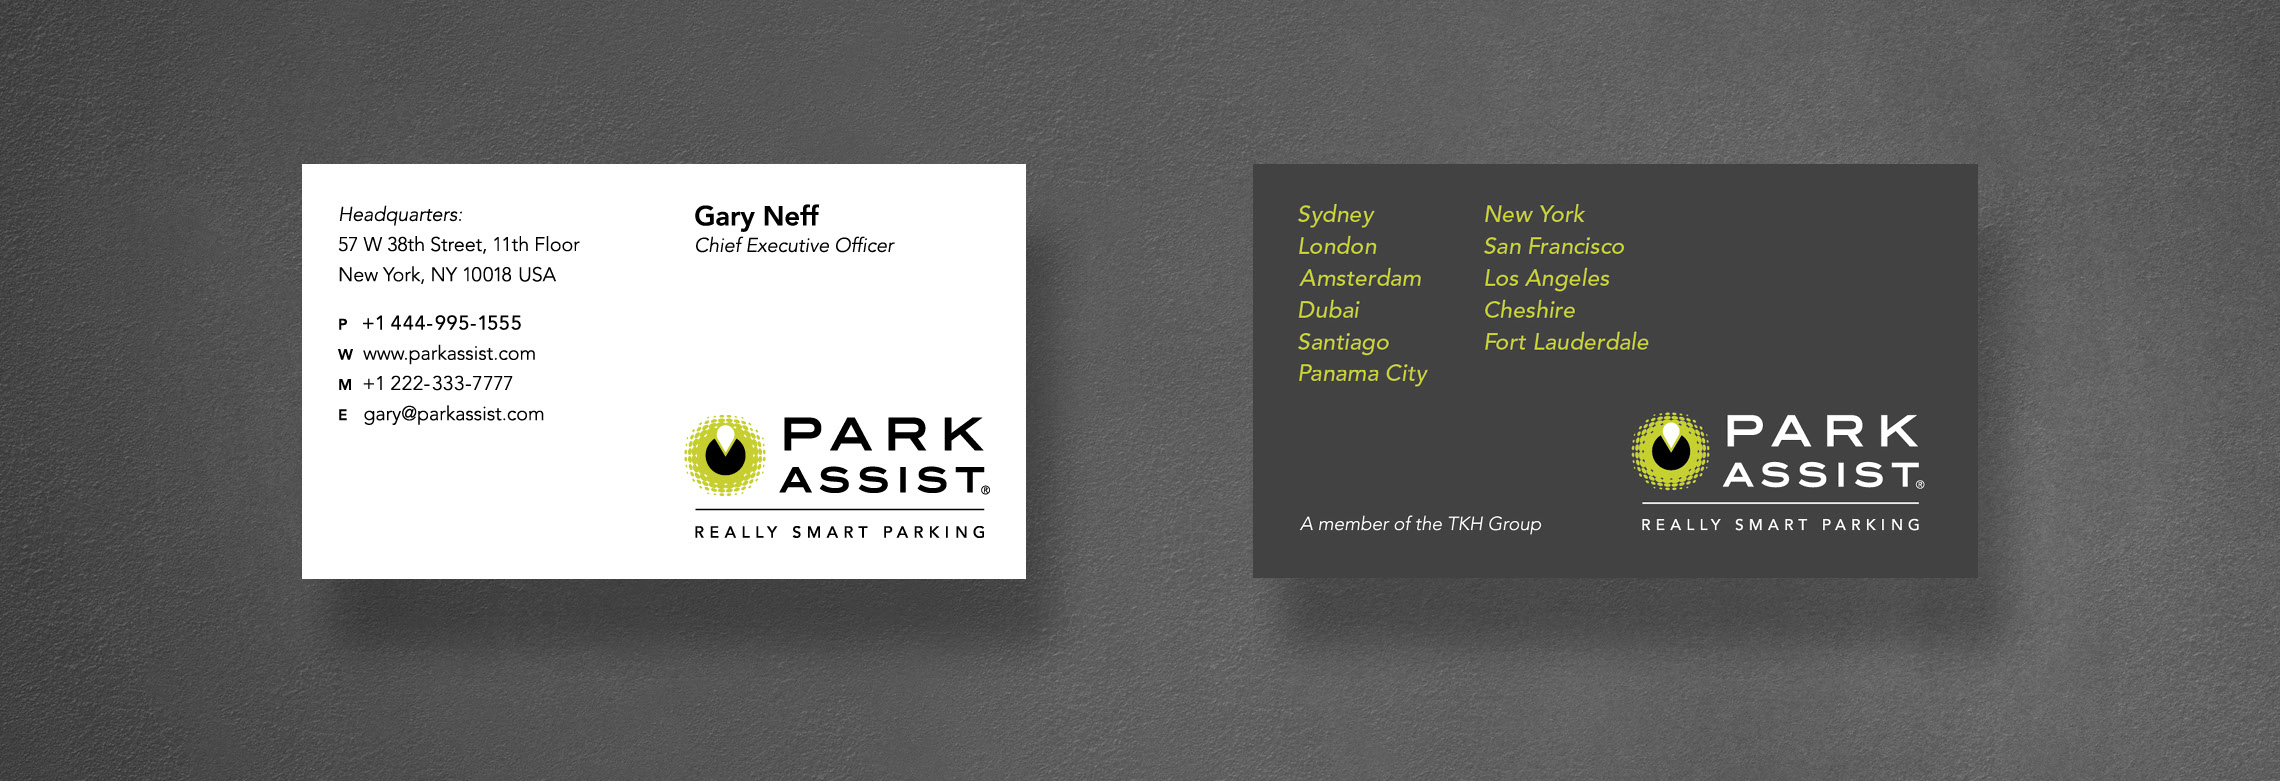 Park Assist business card design